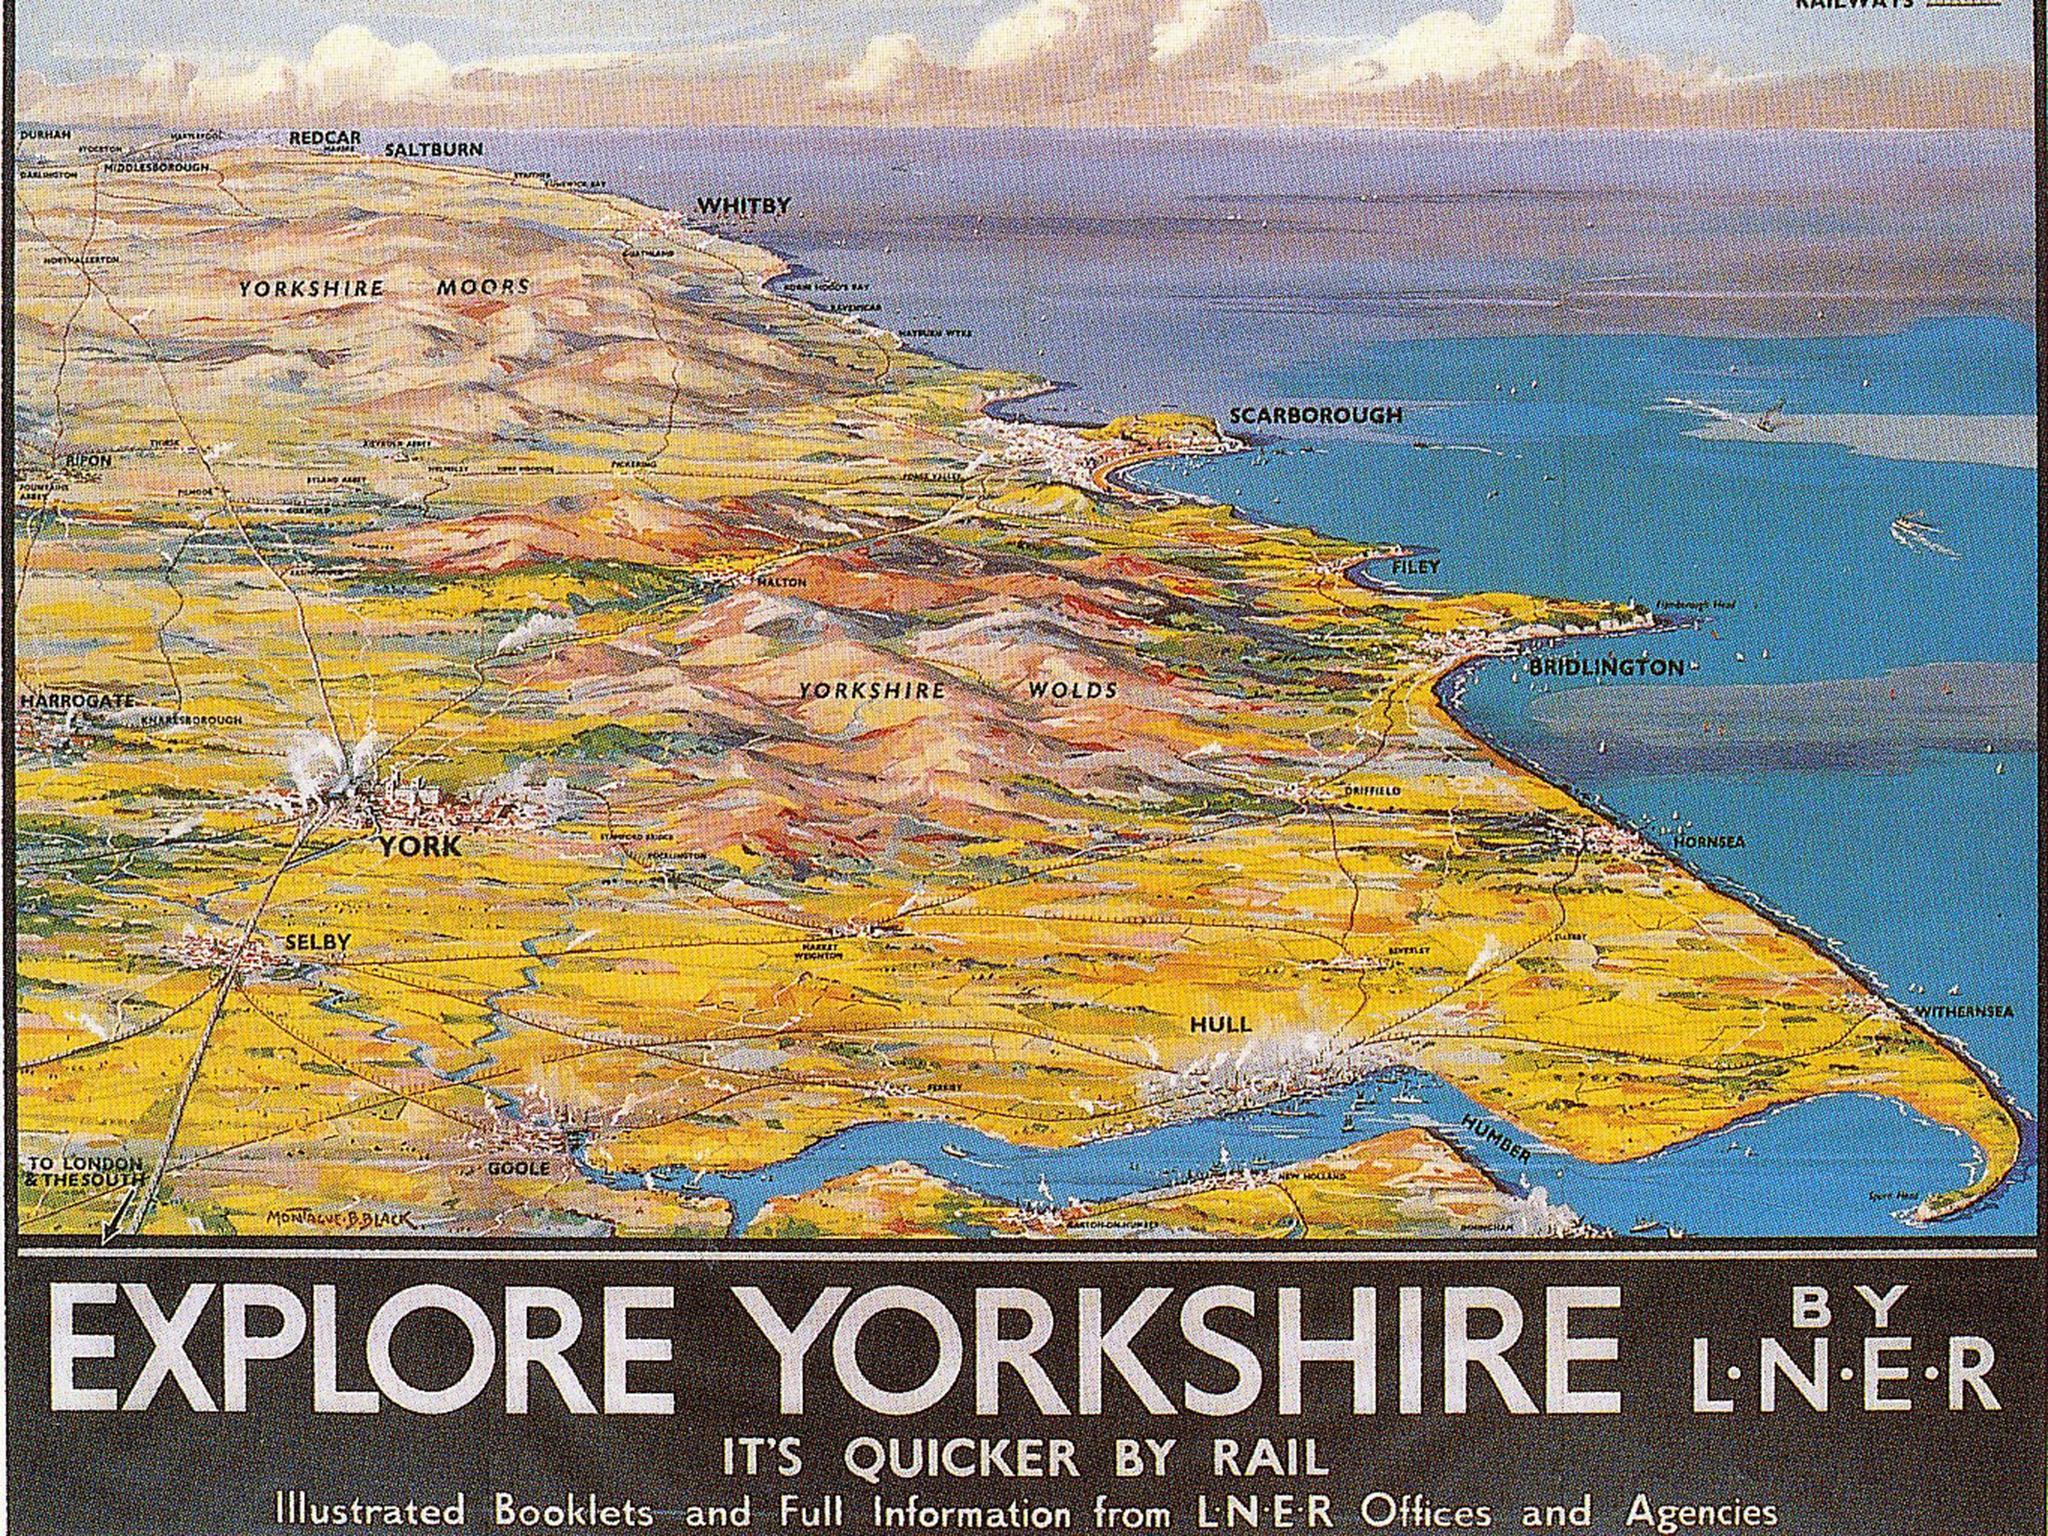 TU9 Vintage Yorkshire British Railways Railway Travel Tourism Poster Re-Print A4 